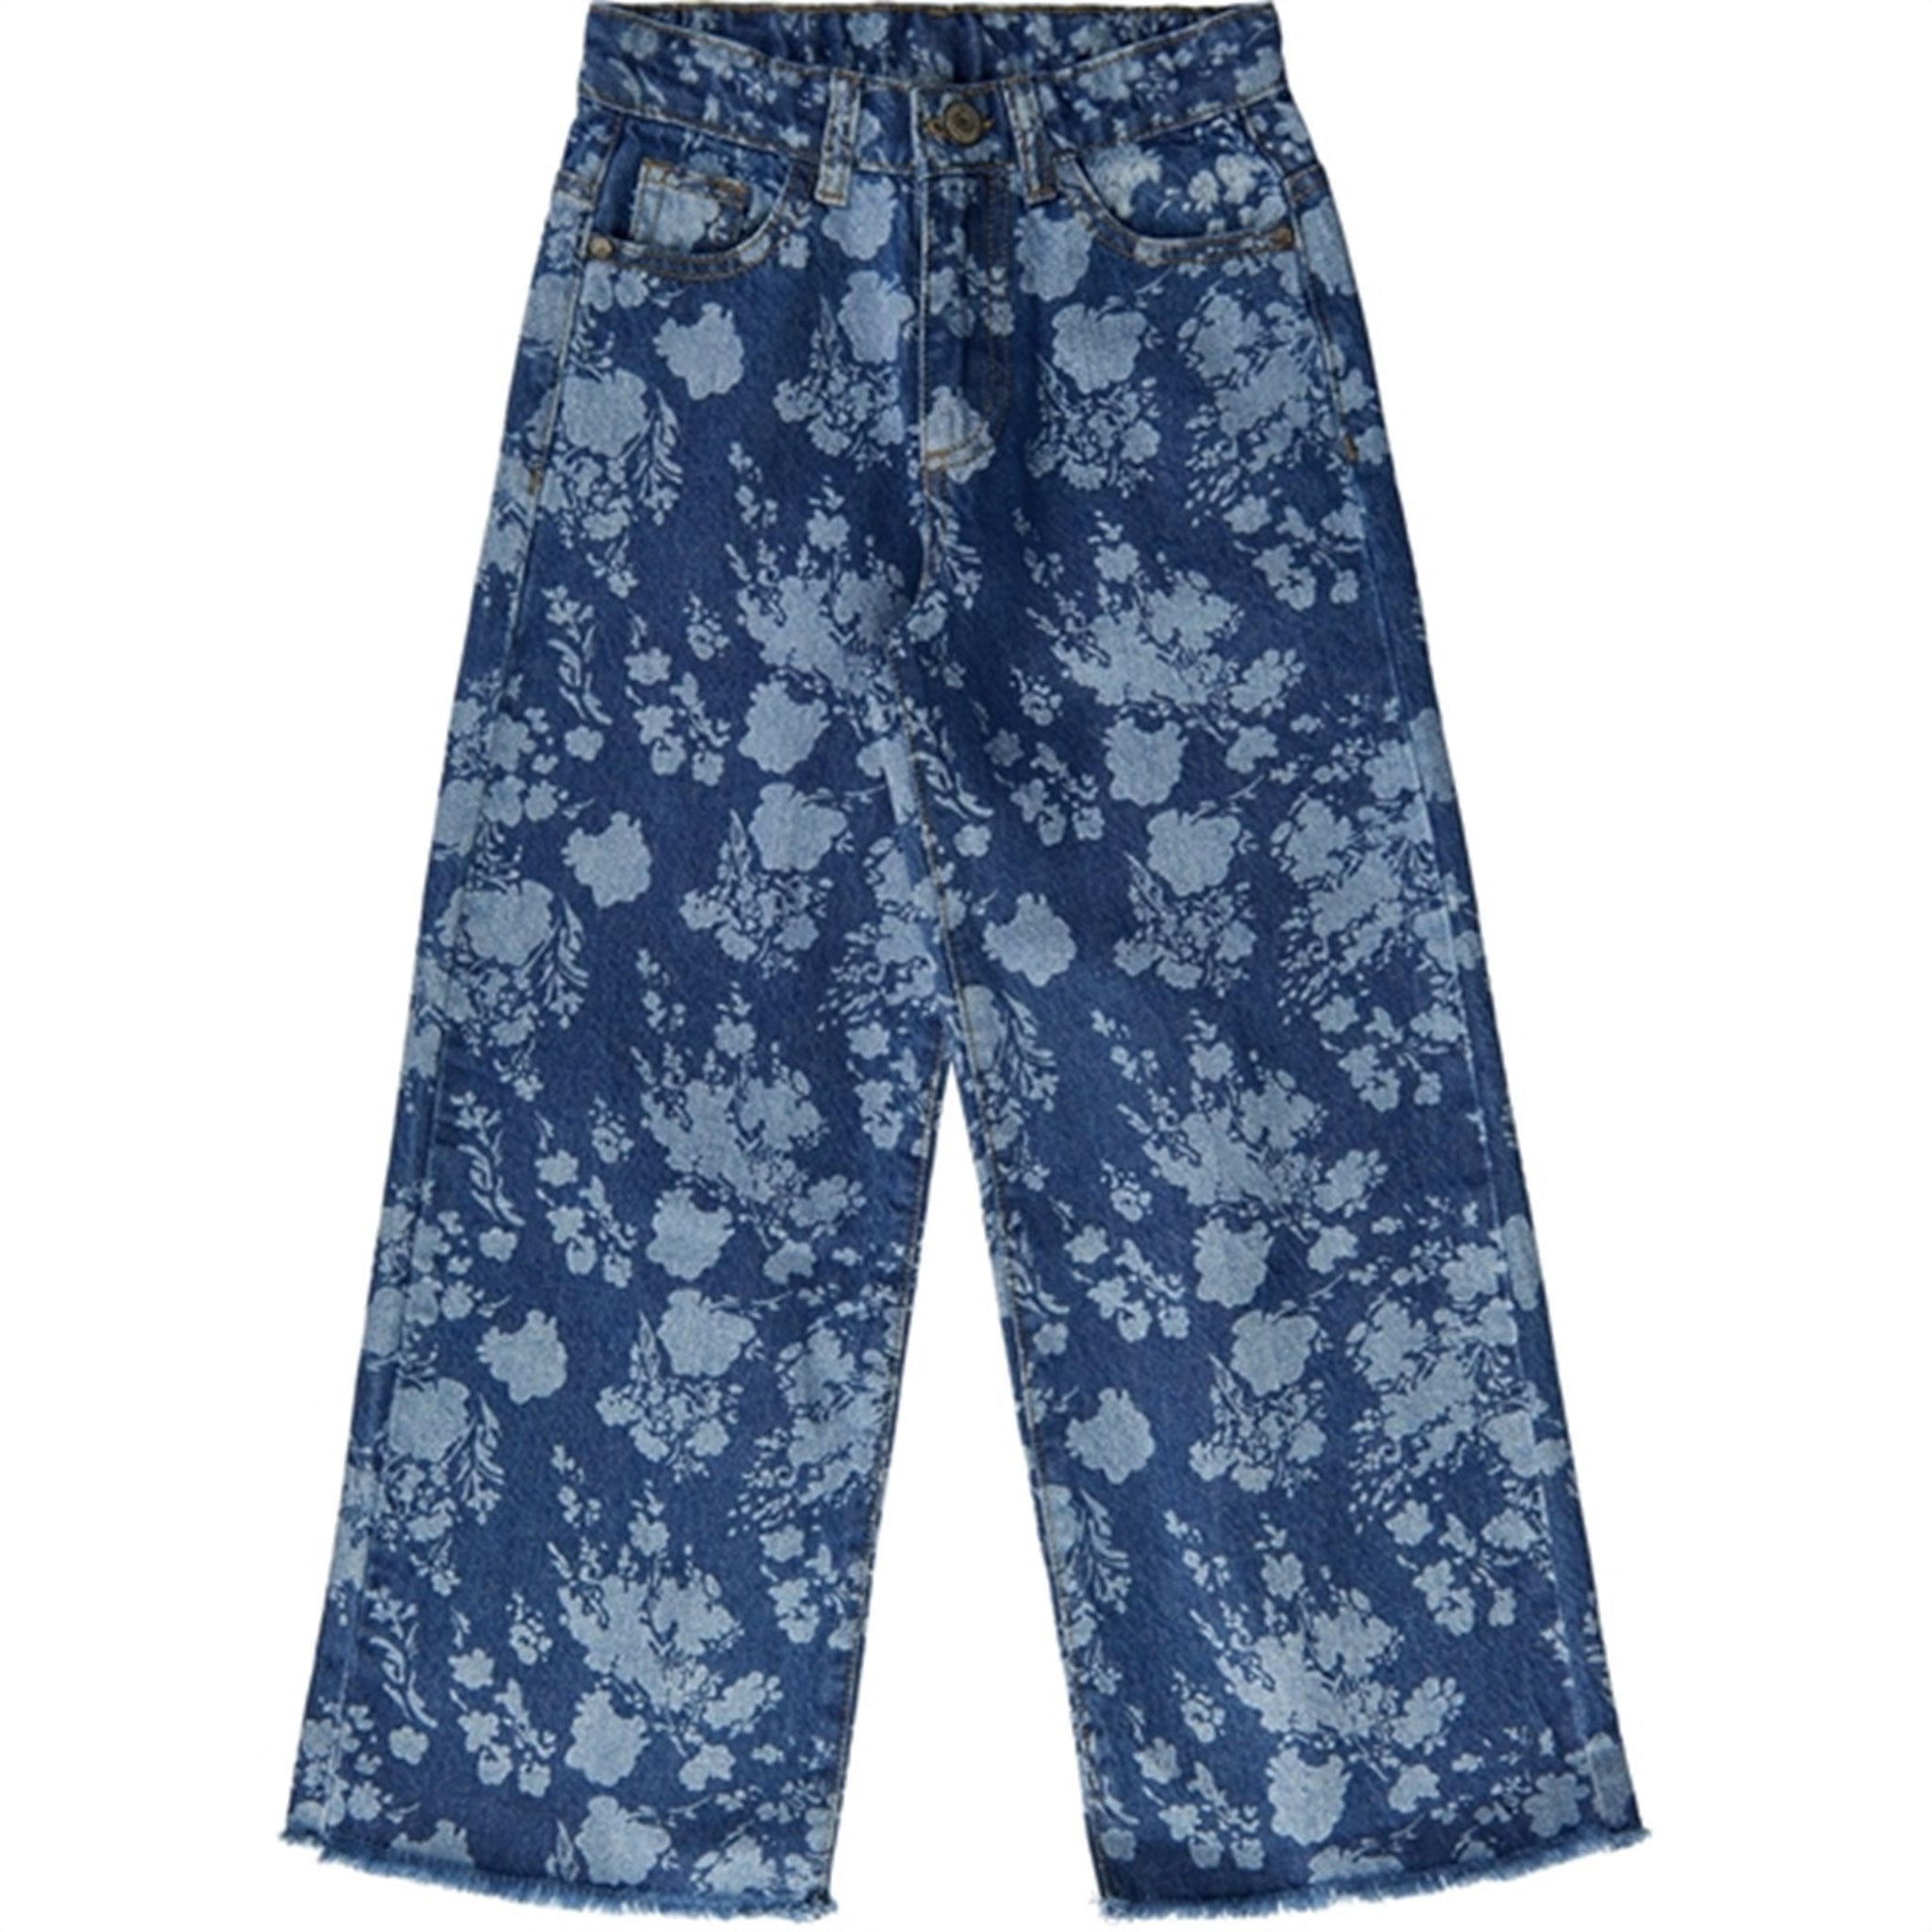 THE NEW Blue Denim Florana Wide Jeans